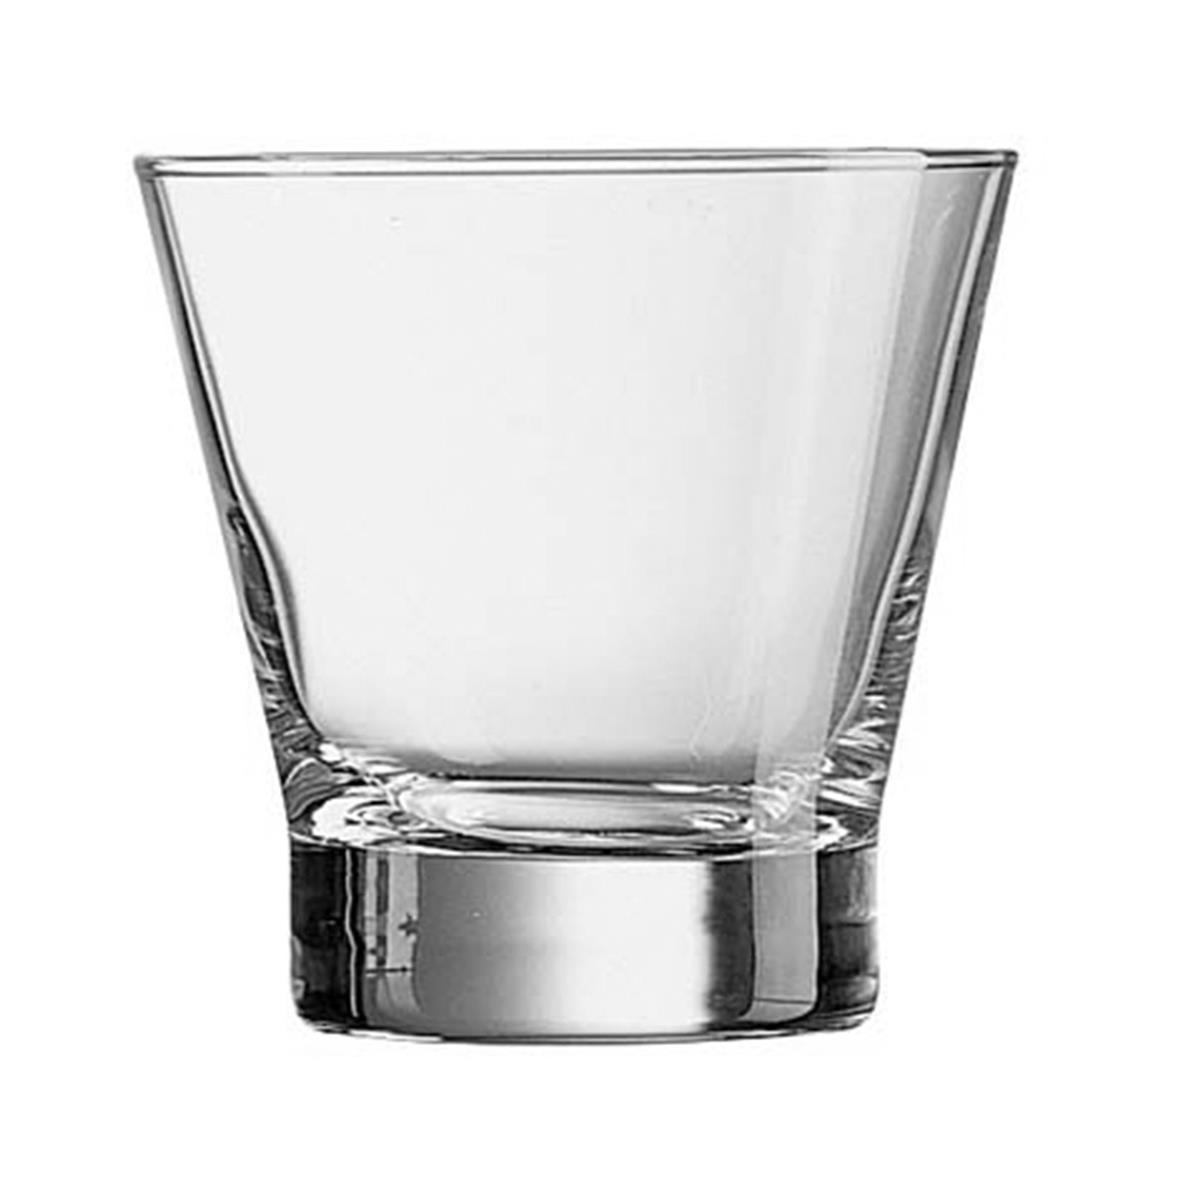 Shetland Glas bedrucken oder gravieren lassen